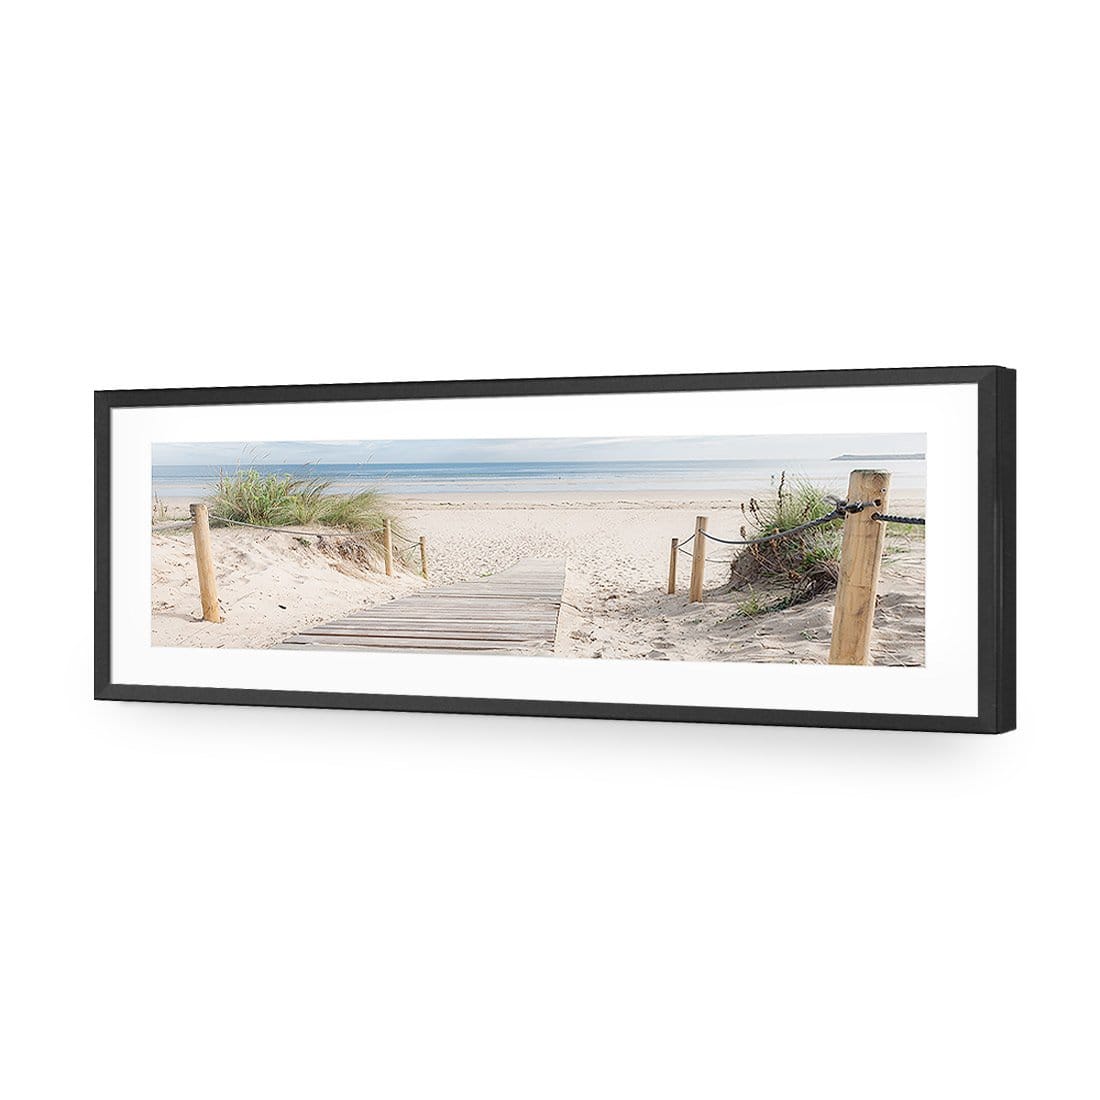 Beach Path, Long-Acrylic-Wall Art Design-With Border-Acrylic - Black Frame-60x20cm-Wall Art Designs